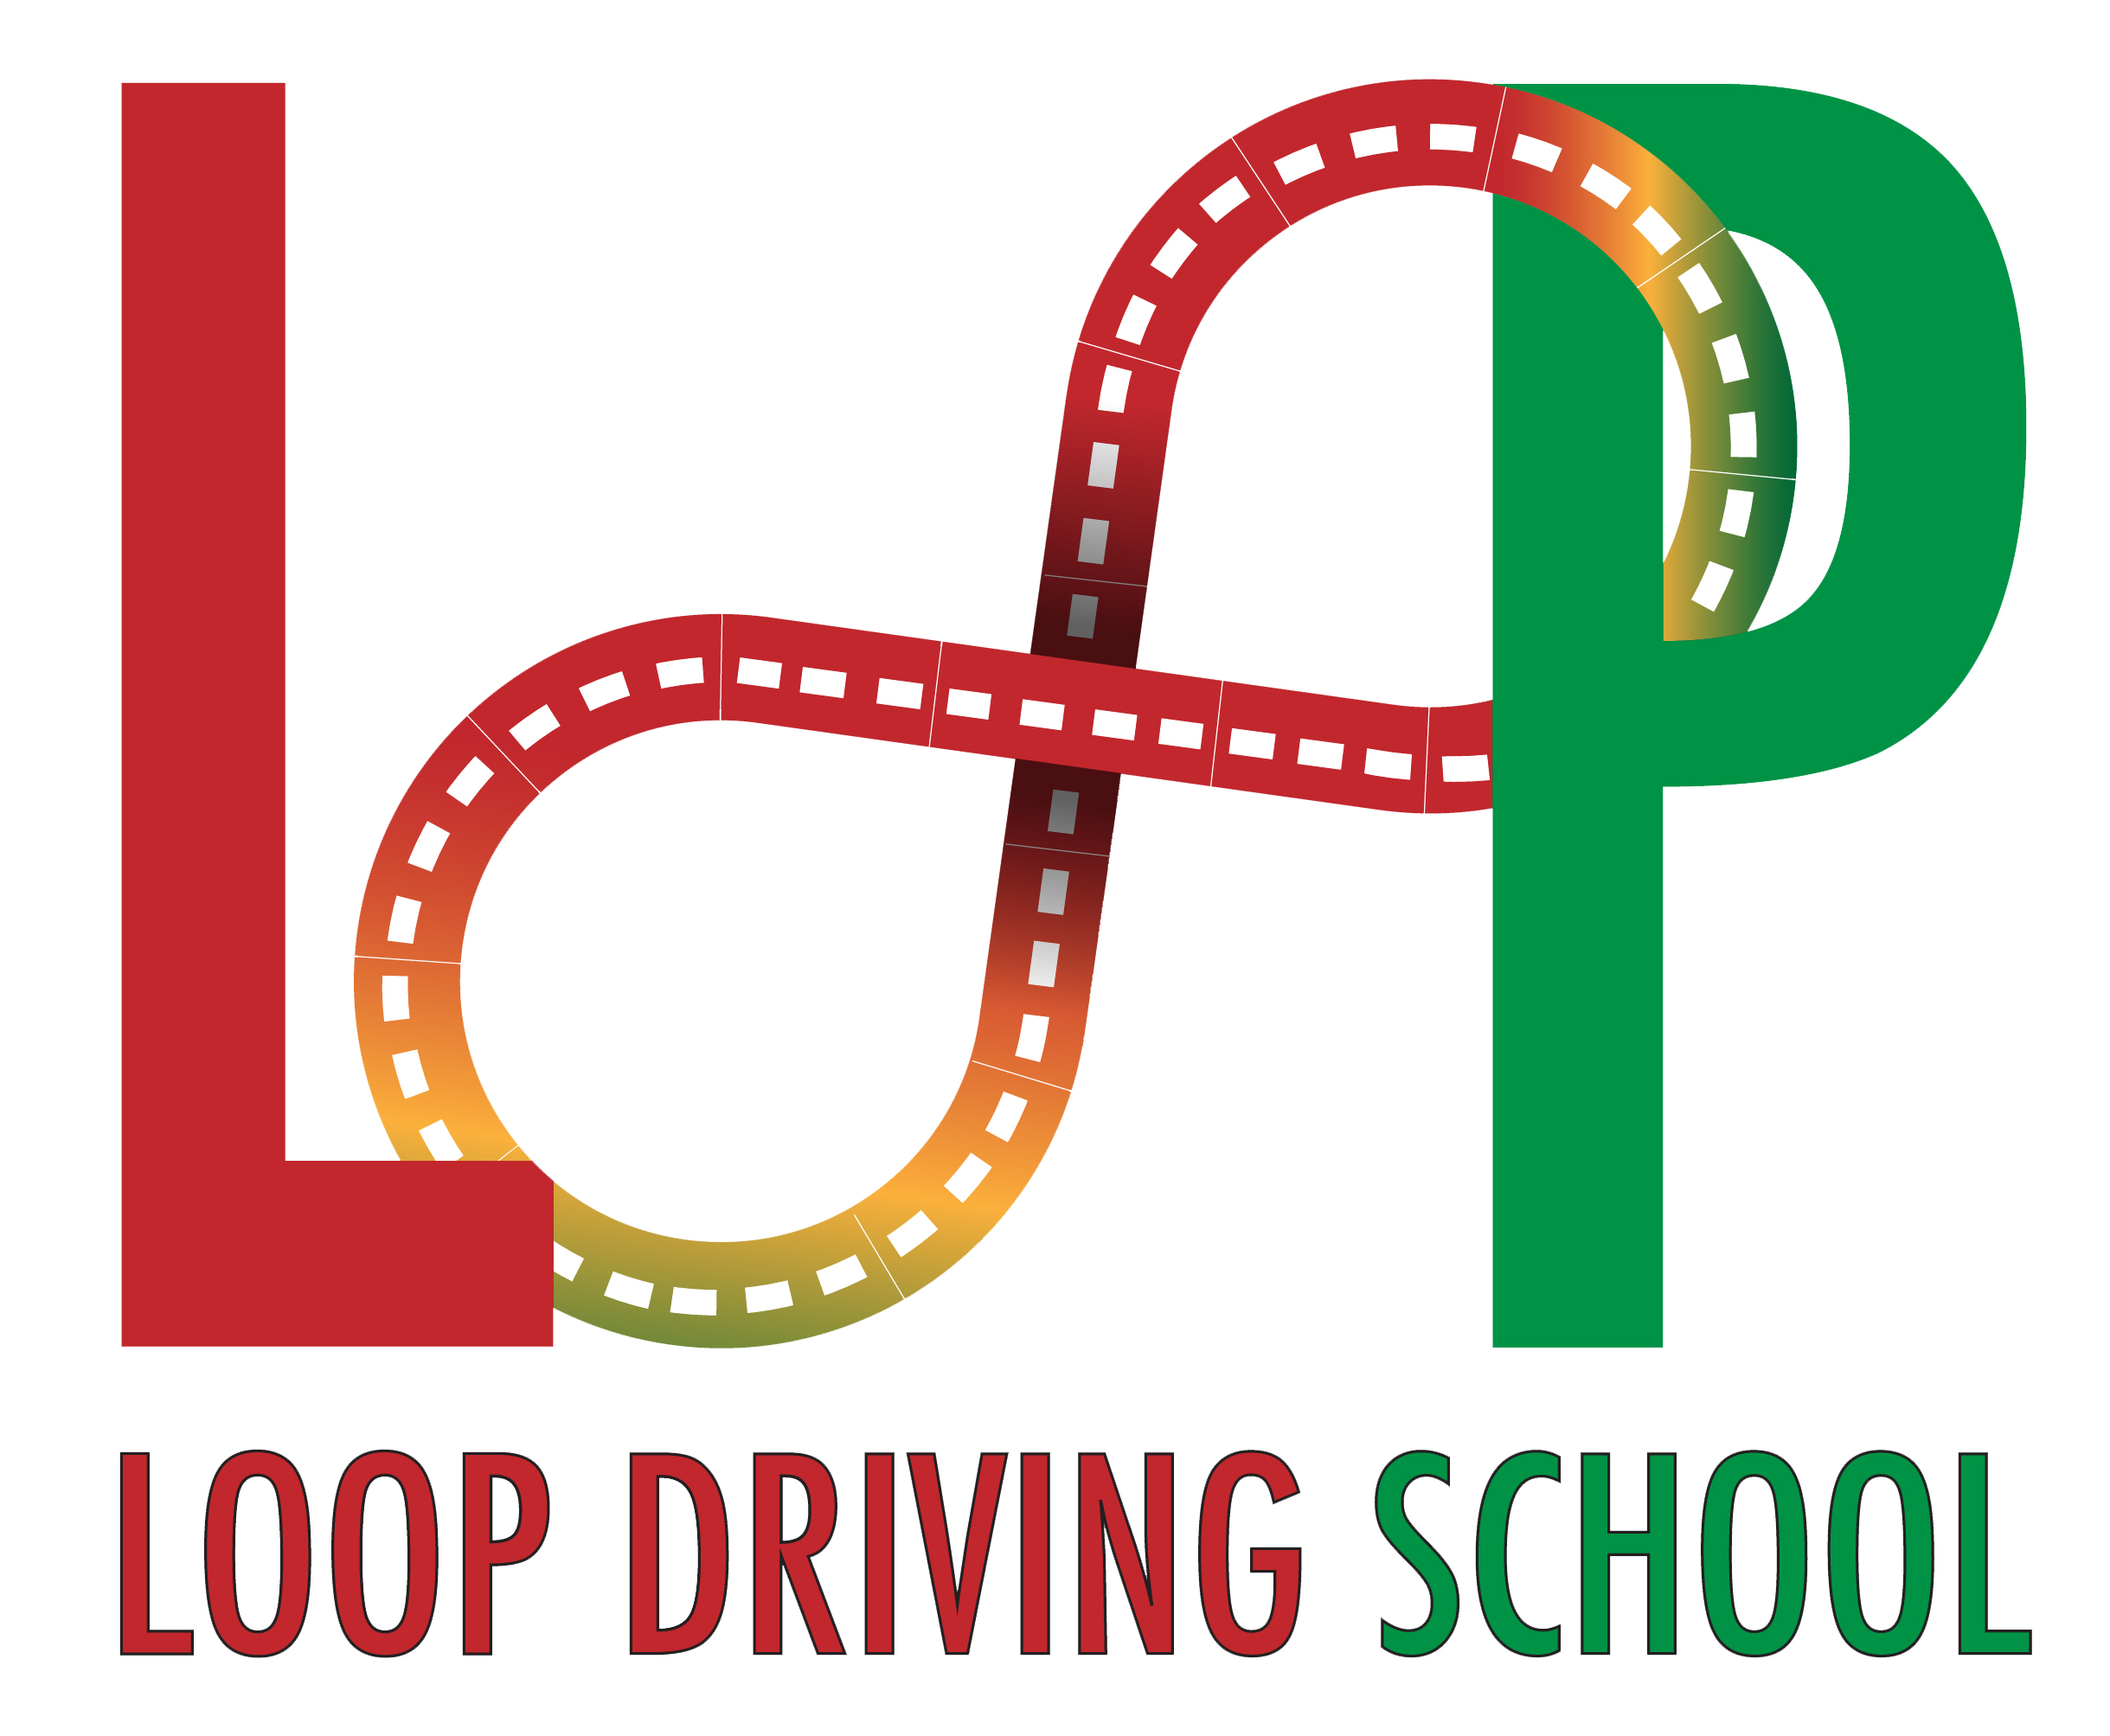 driving-logo